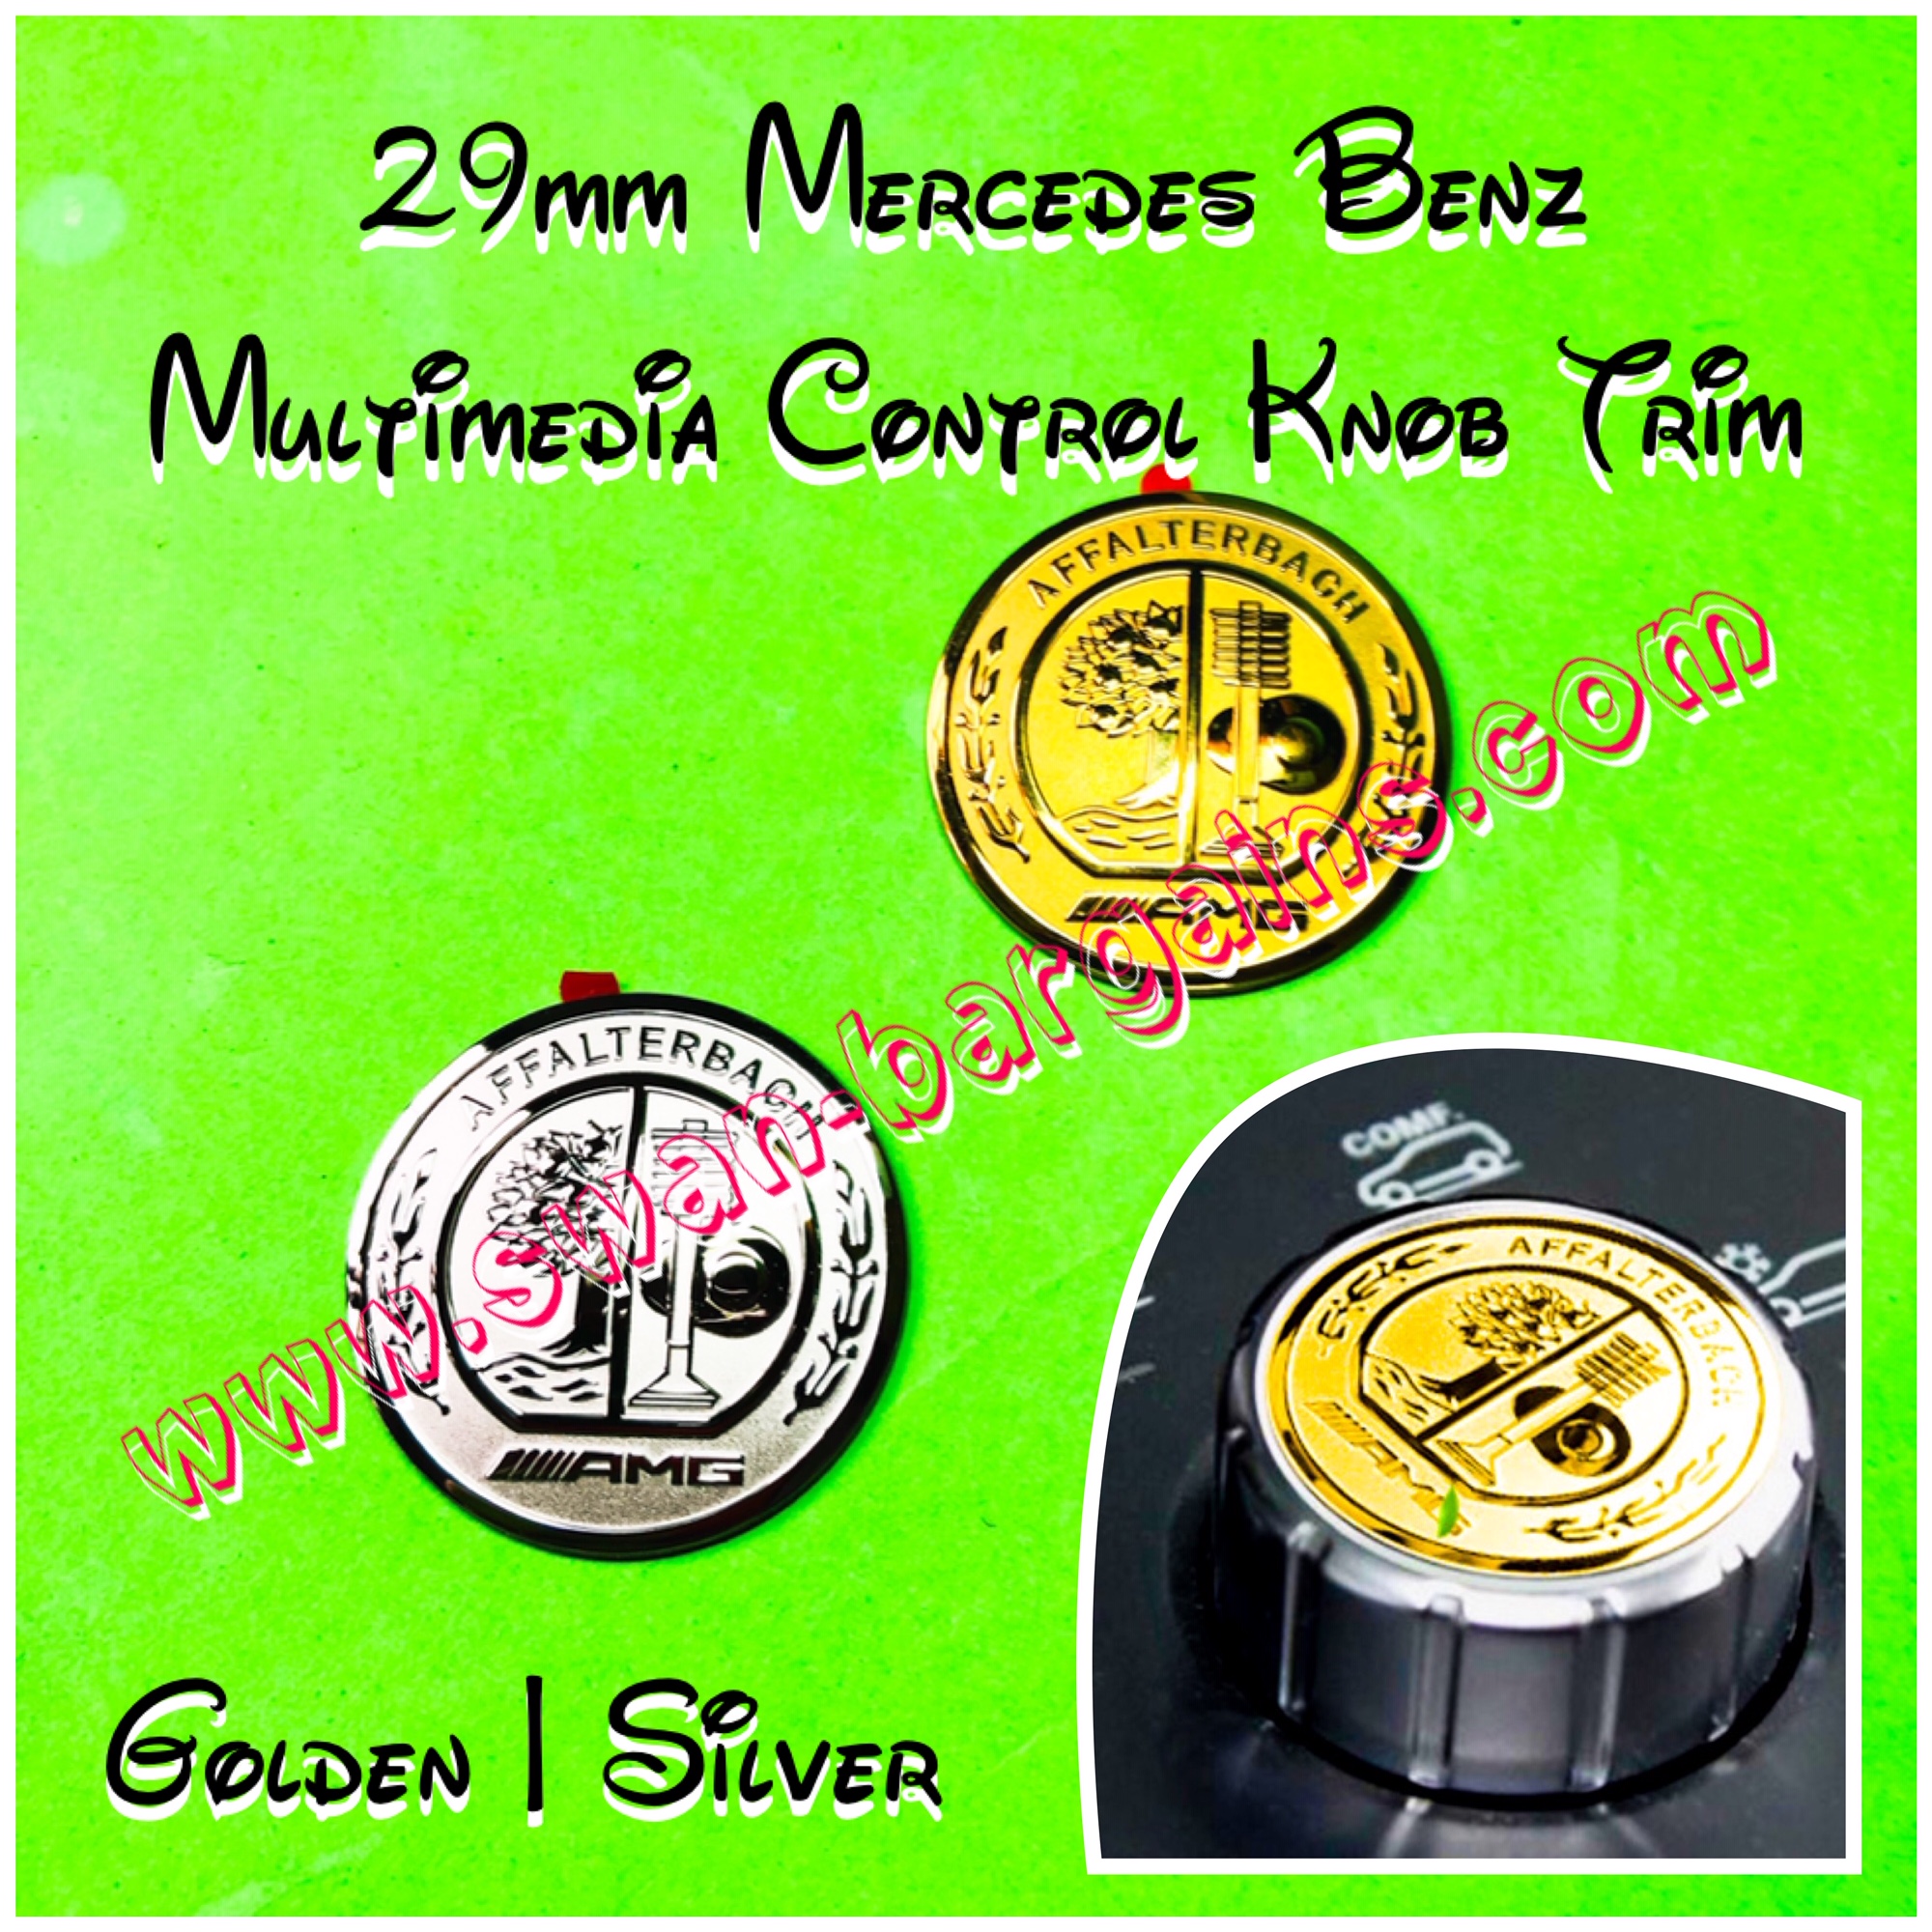 29mm Mercedes Benz Multimedia Control Knob Trim Singapore - AMG Silver Gold